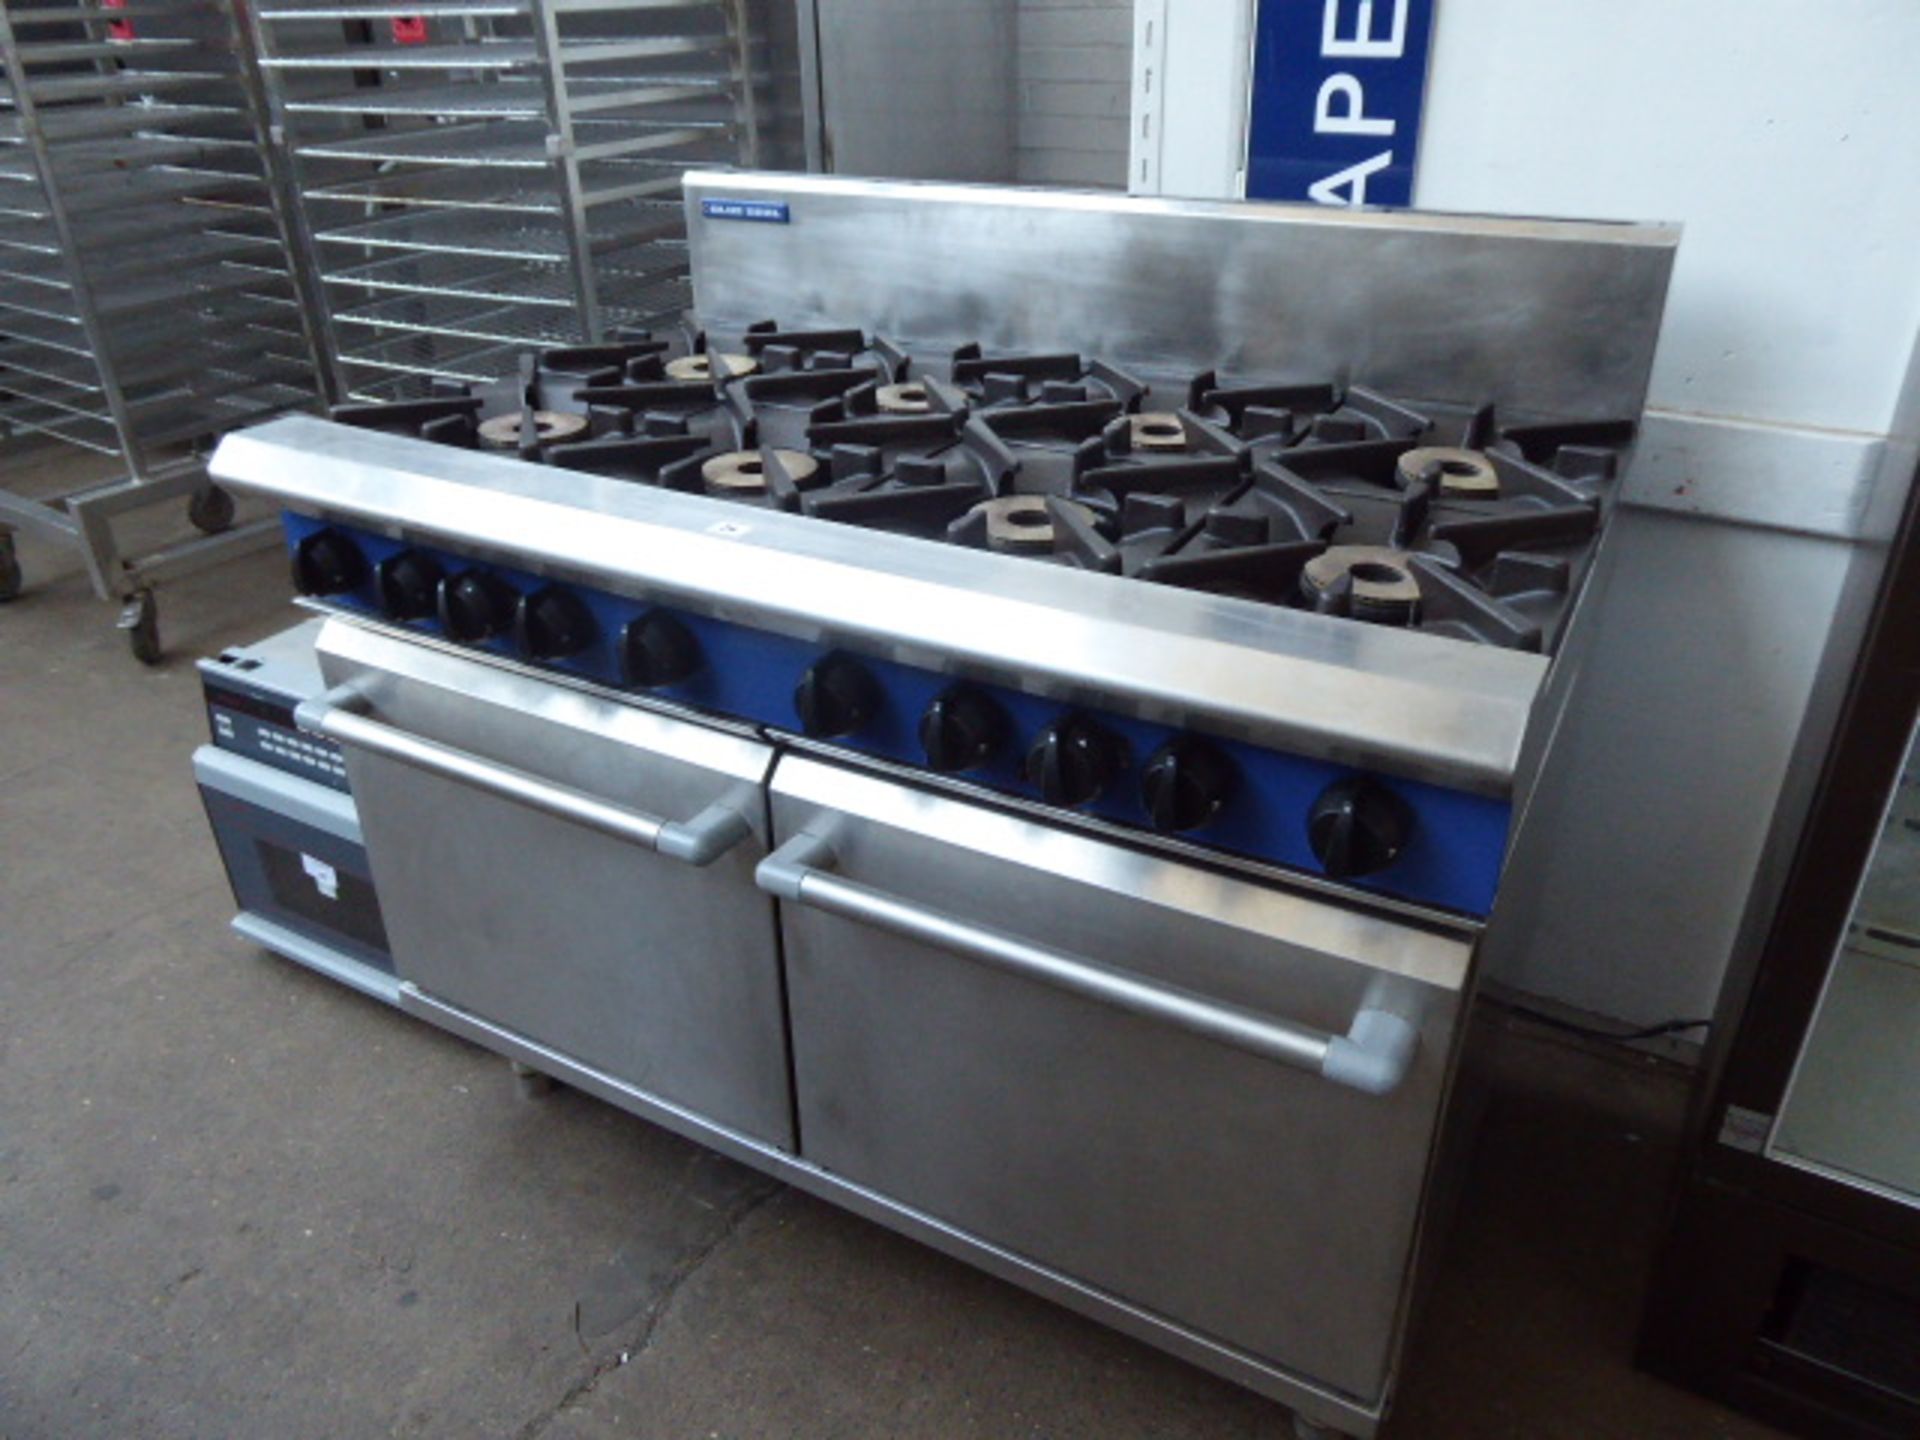 120cm gas Blue Seal 8 burner cooker with 2 single door ovens under